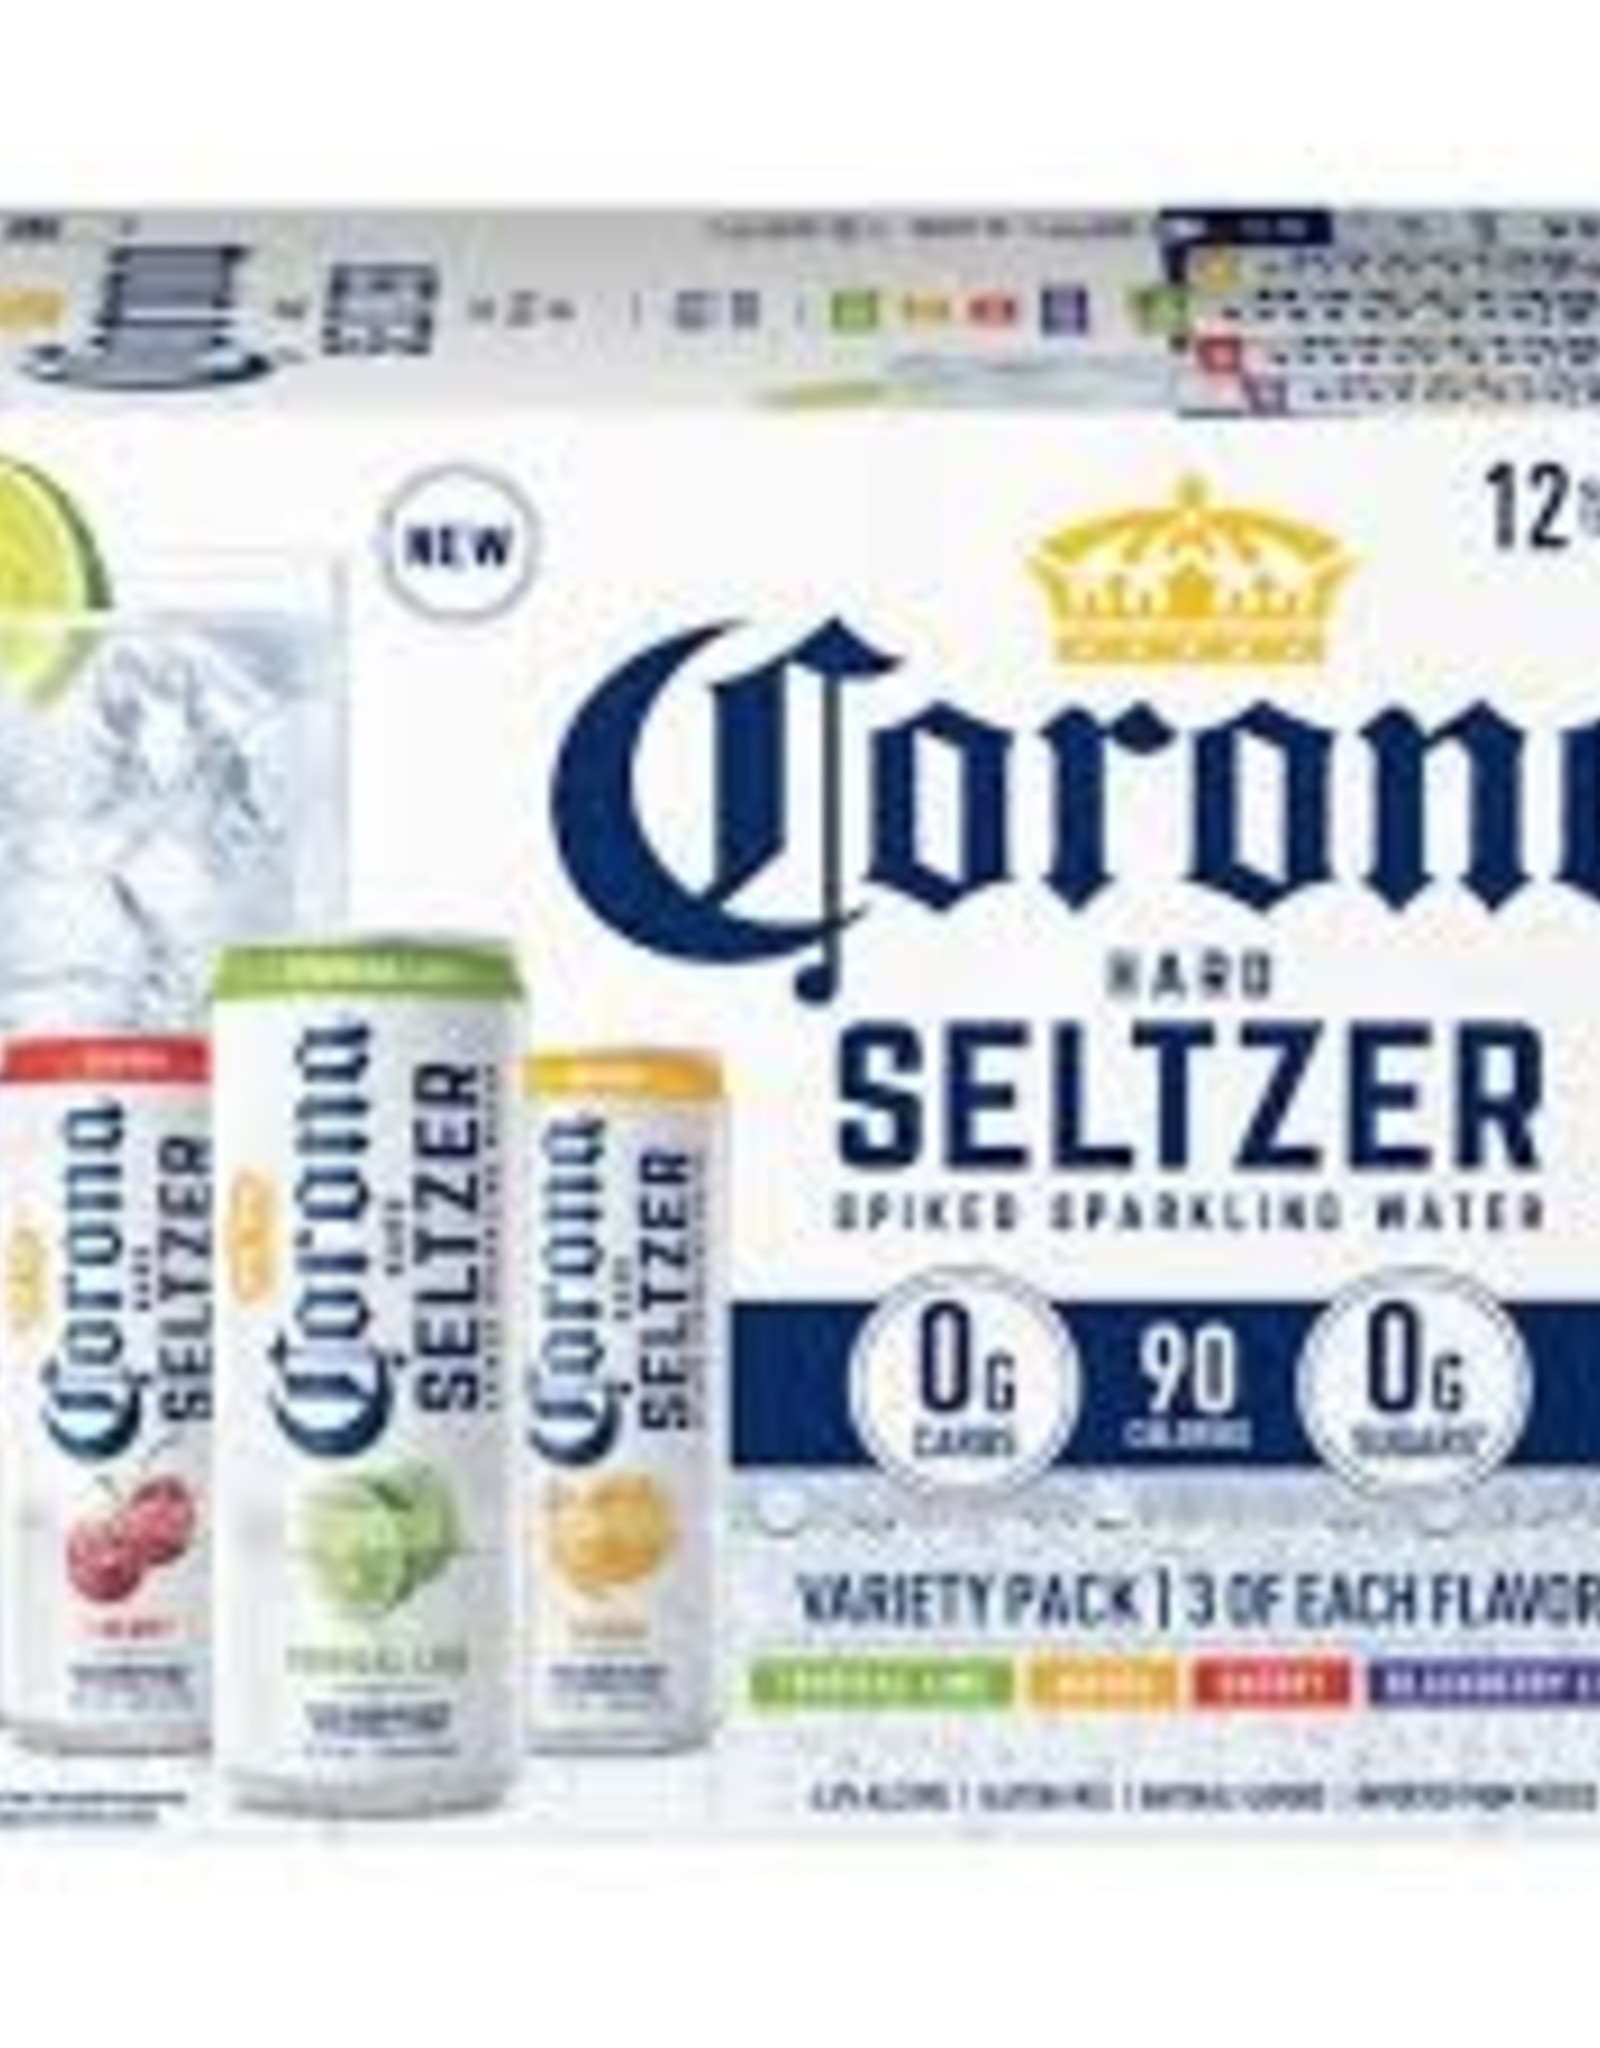 Corona Seltzer Trp 12x12 oz slim cans